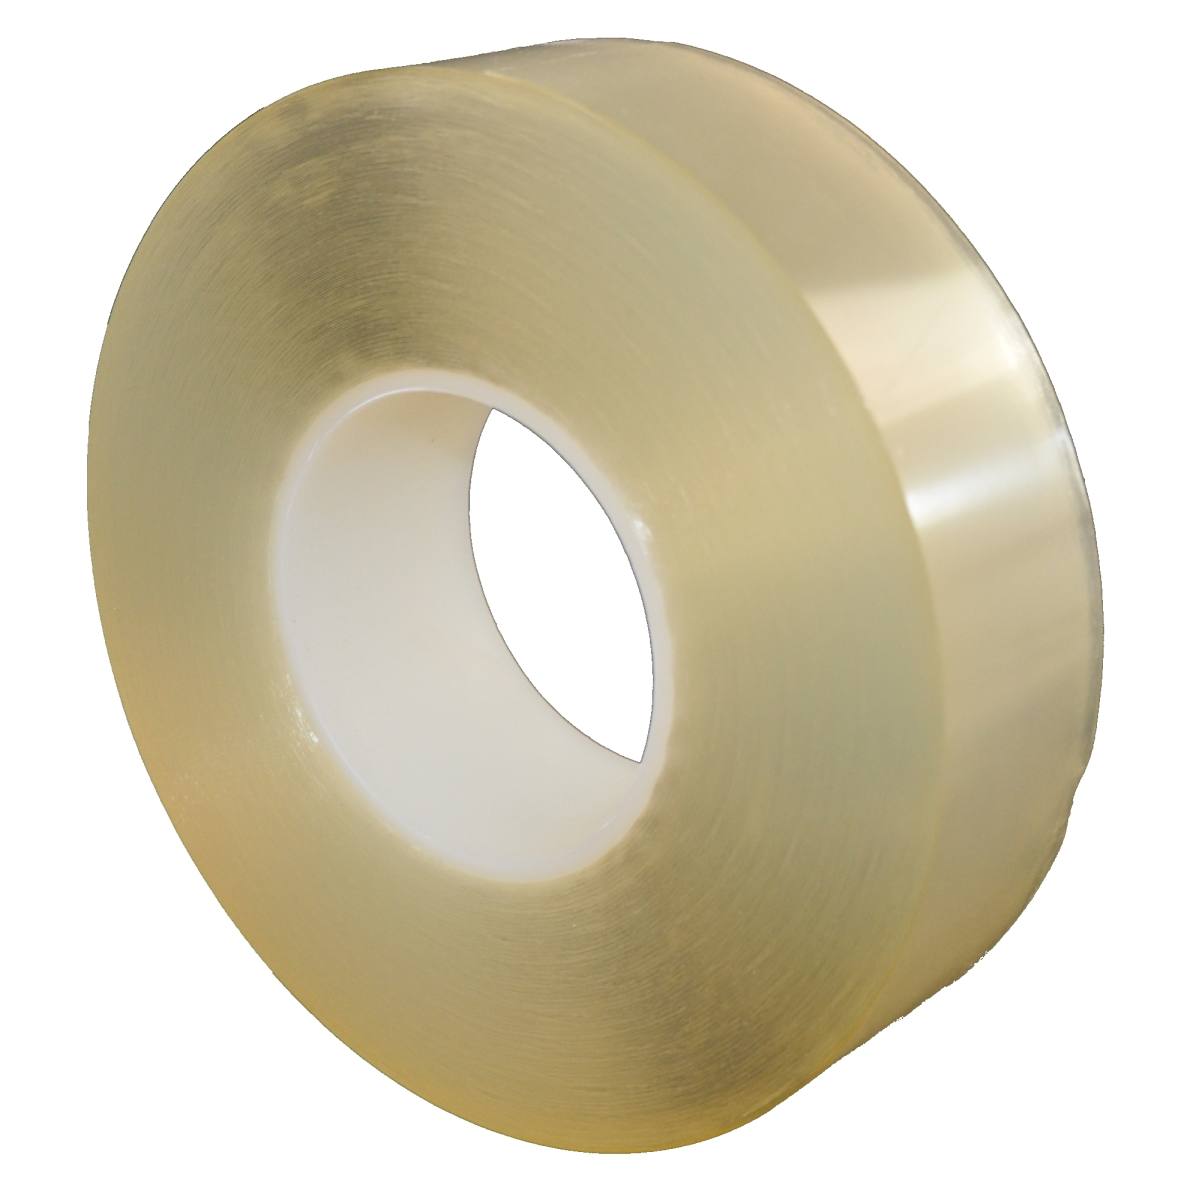 S-K-S transfer adhesive tape 2283 LE20, transparent, 9 mm x 50 m, 0.30 mm